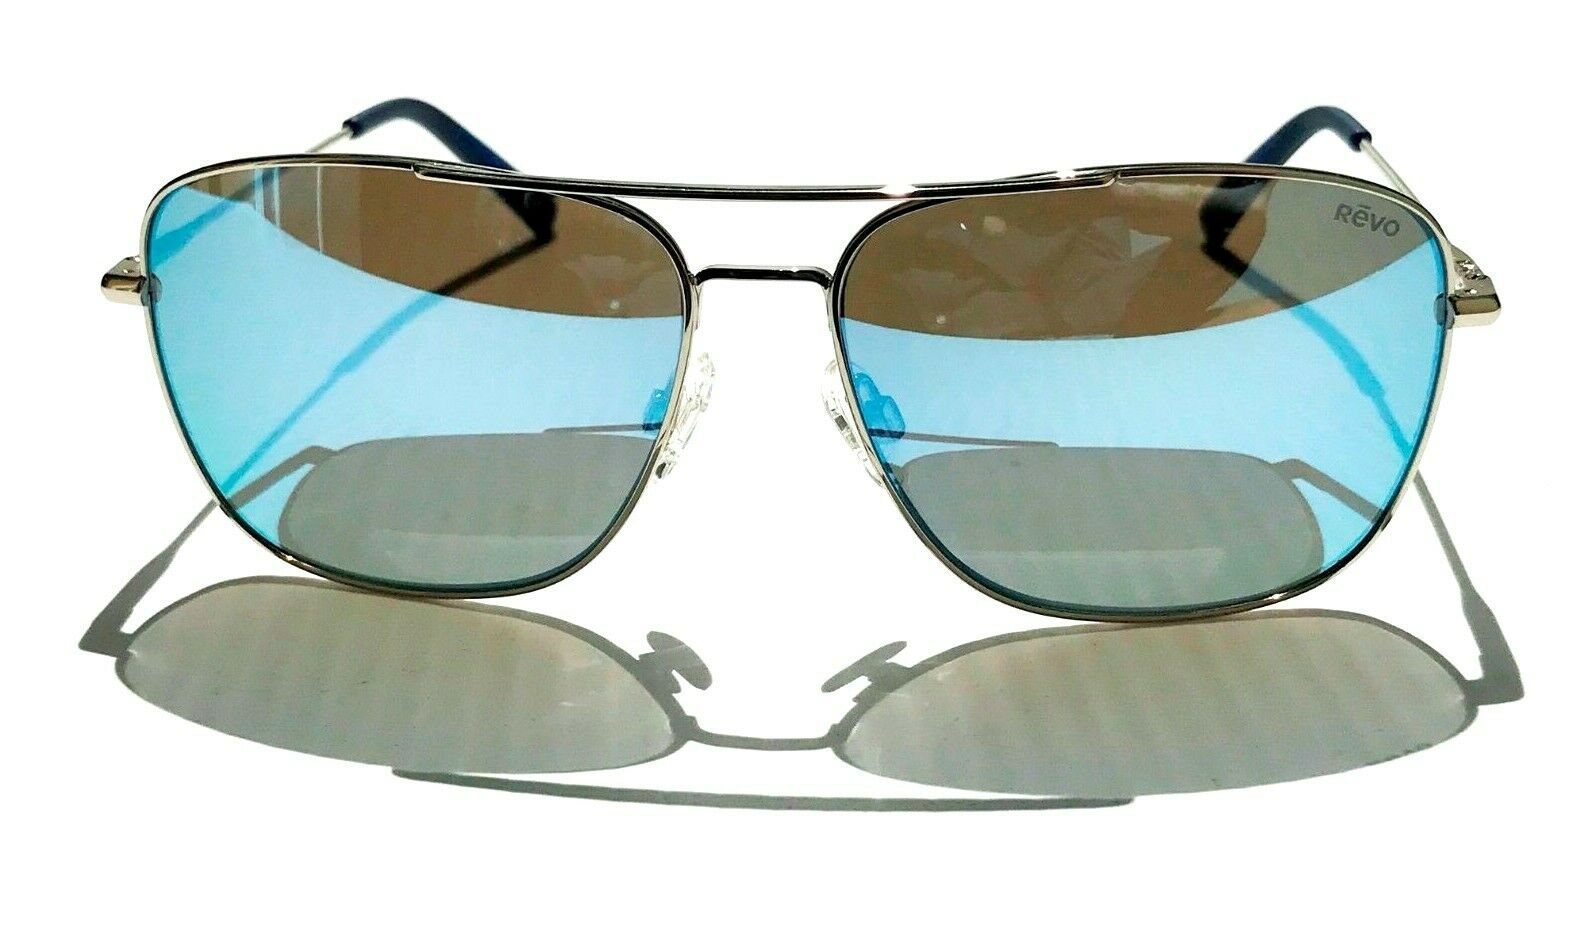 Honua Eco Friendly Sunglasses with Blue Mirror Polarized Lens